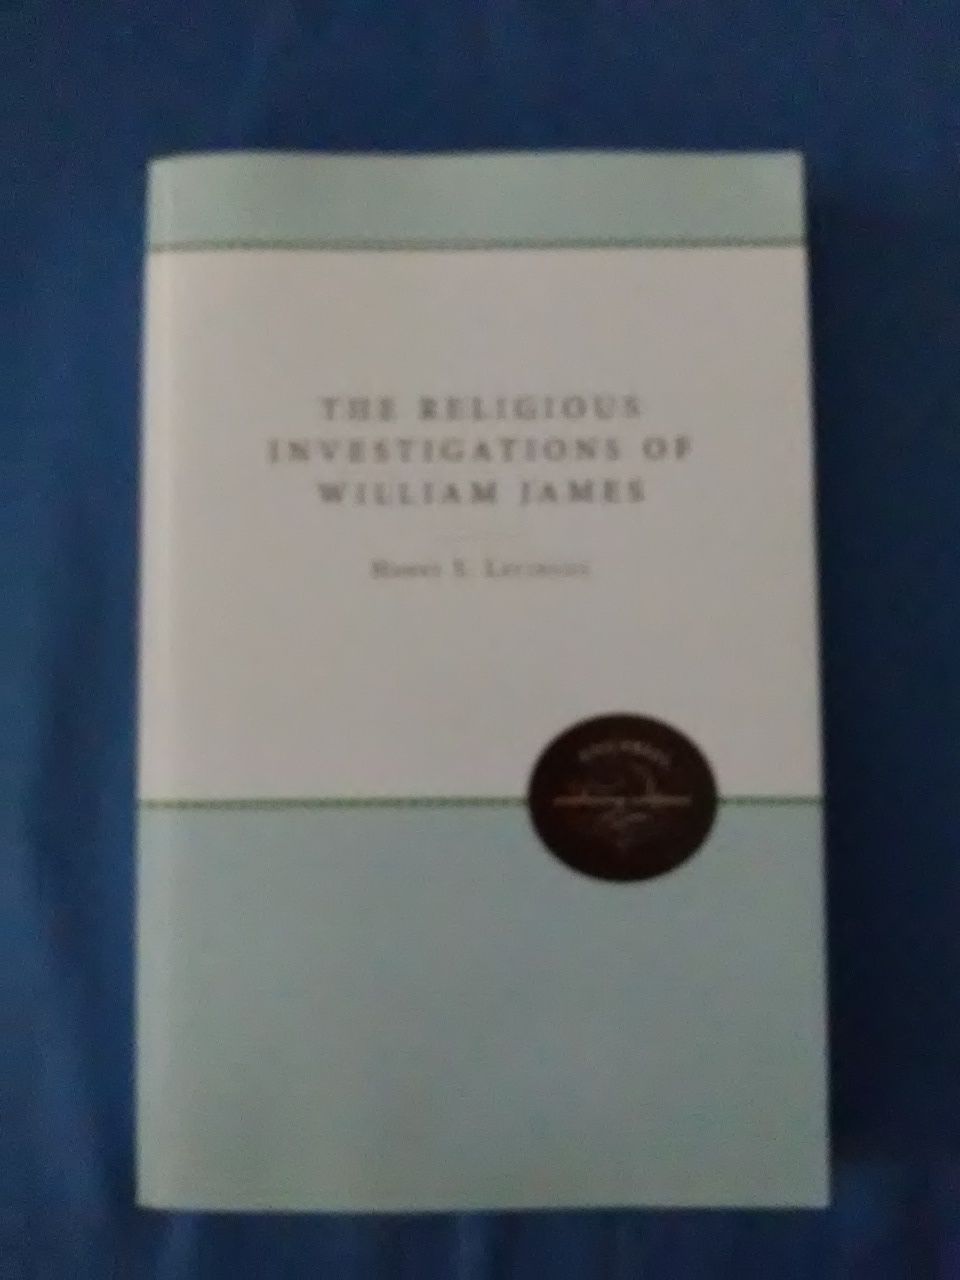 The Religious Investigations of William James (Studies in Religion) - Levinson, Henry